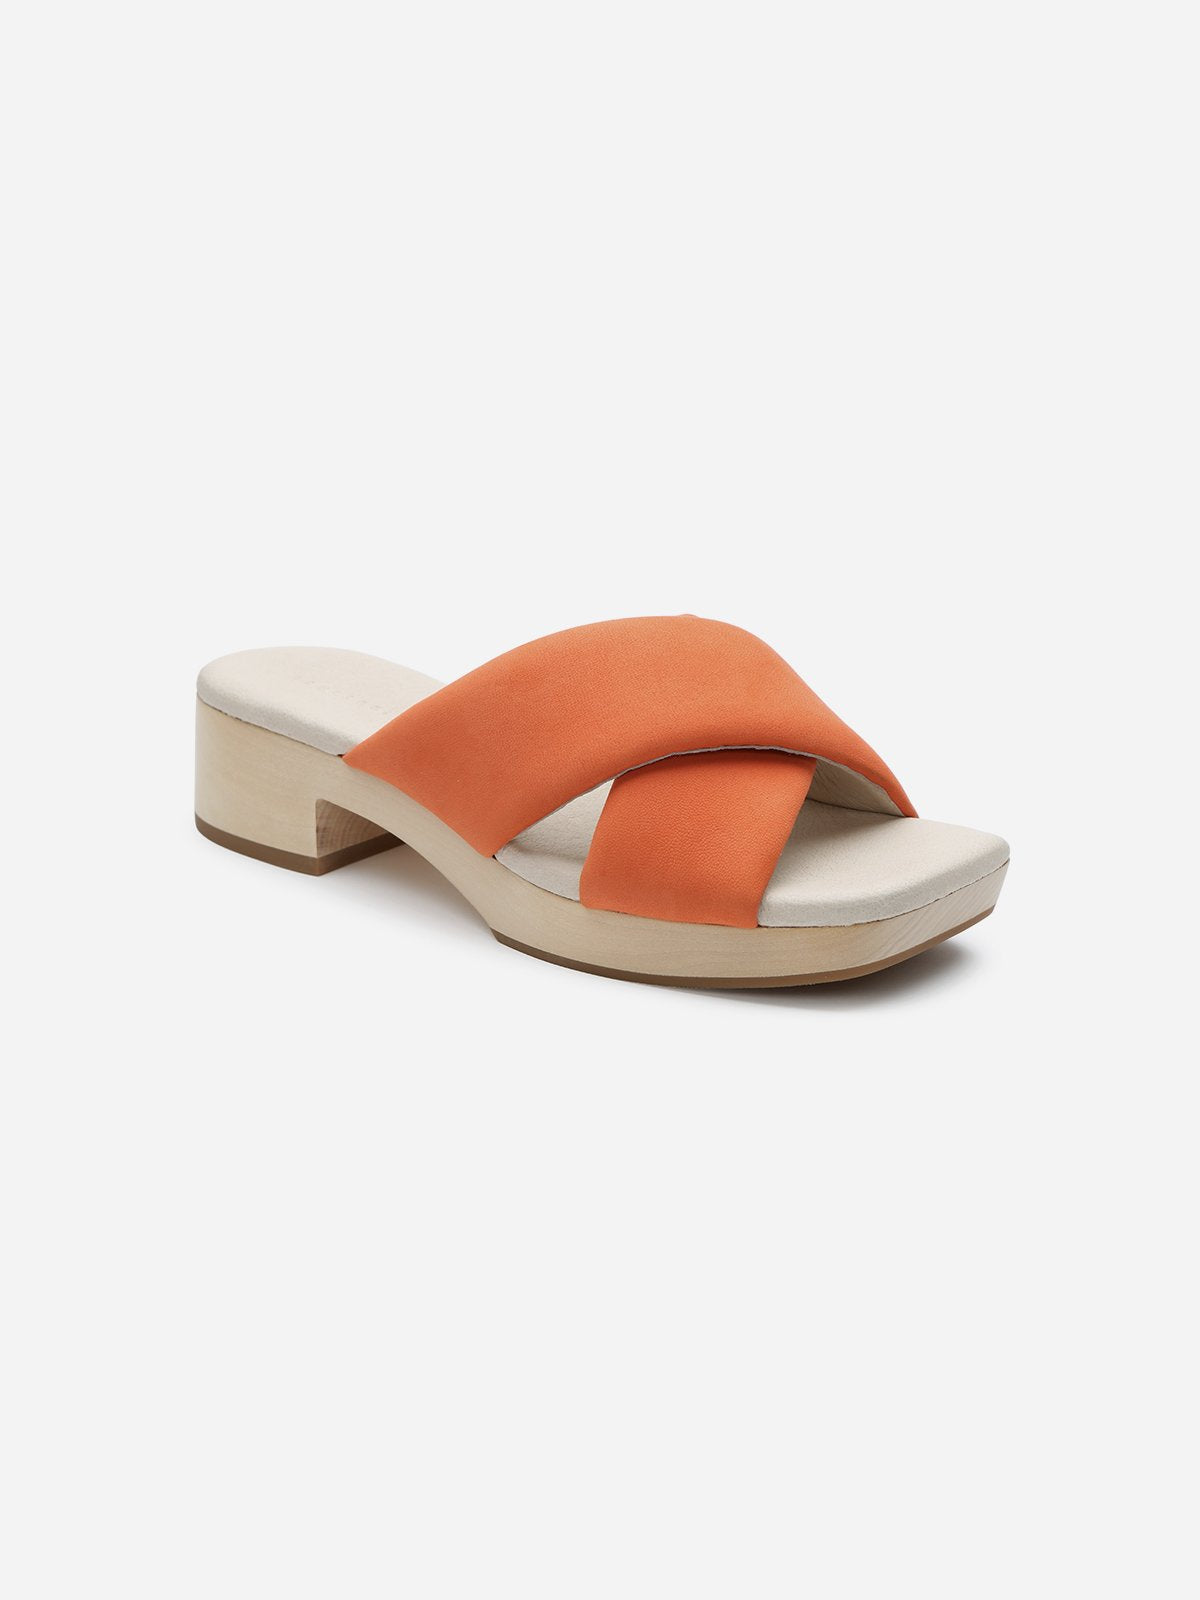 Tangerine Square Toe Wedge Sandal